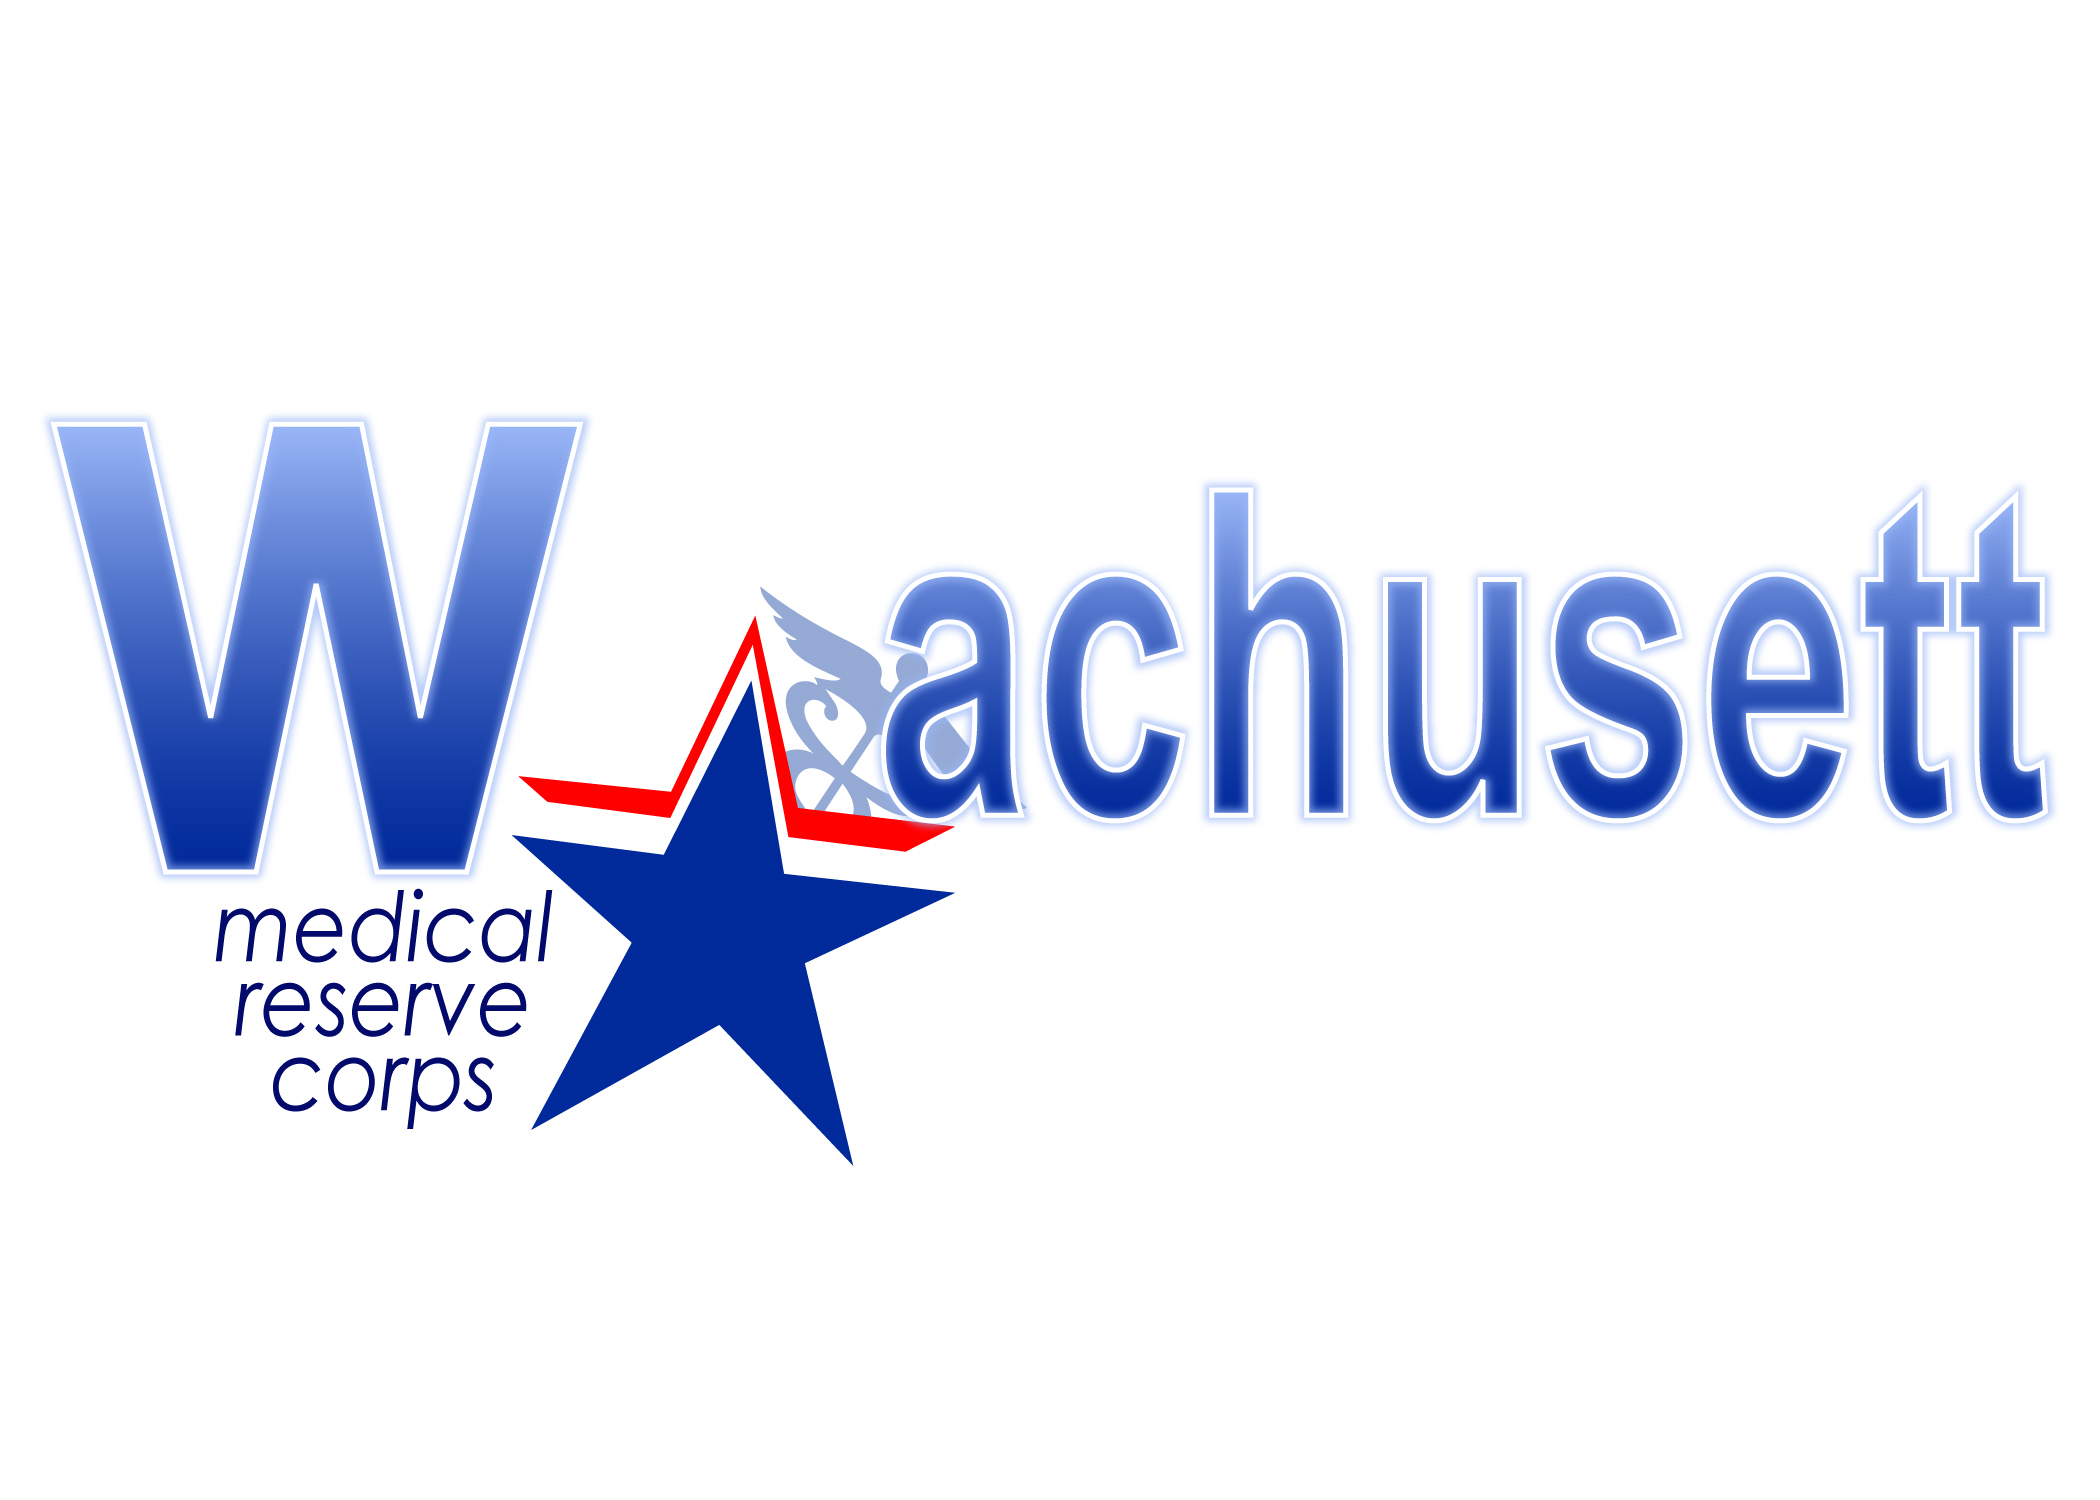 Wachusett Medical Reserve Corps